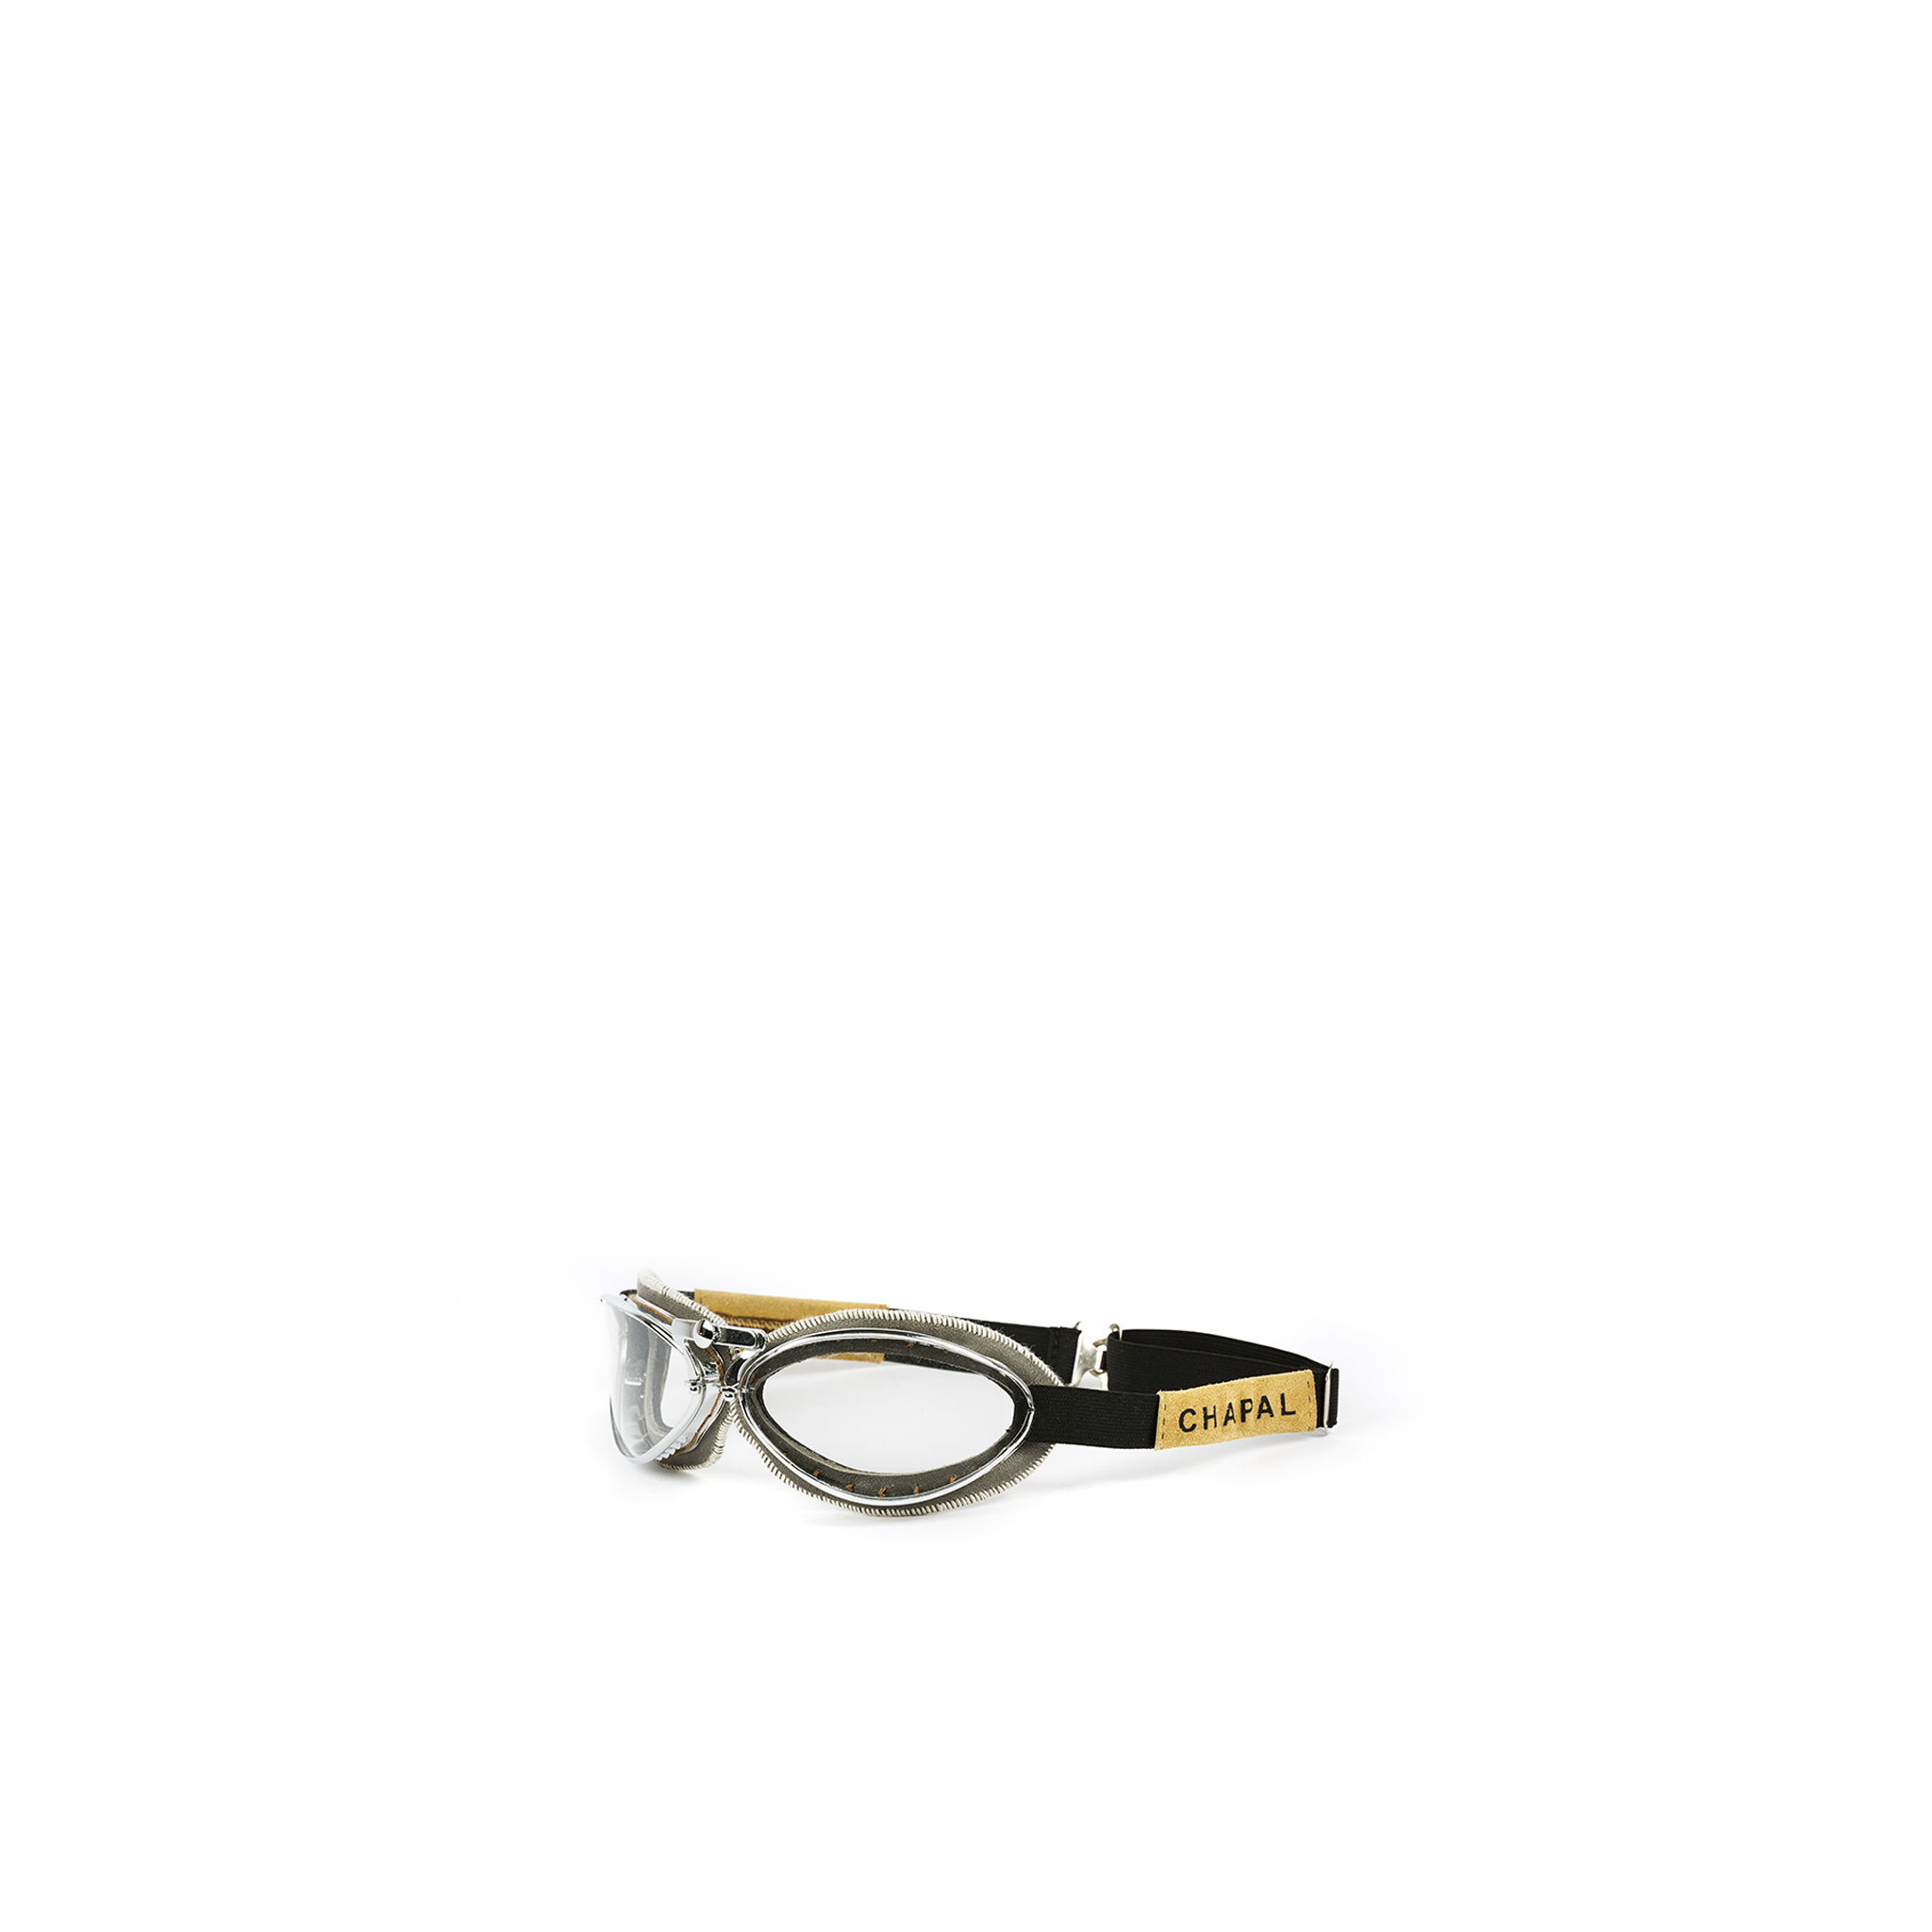 Retro Goggles - Glossy leather - Grey color